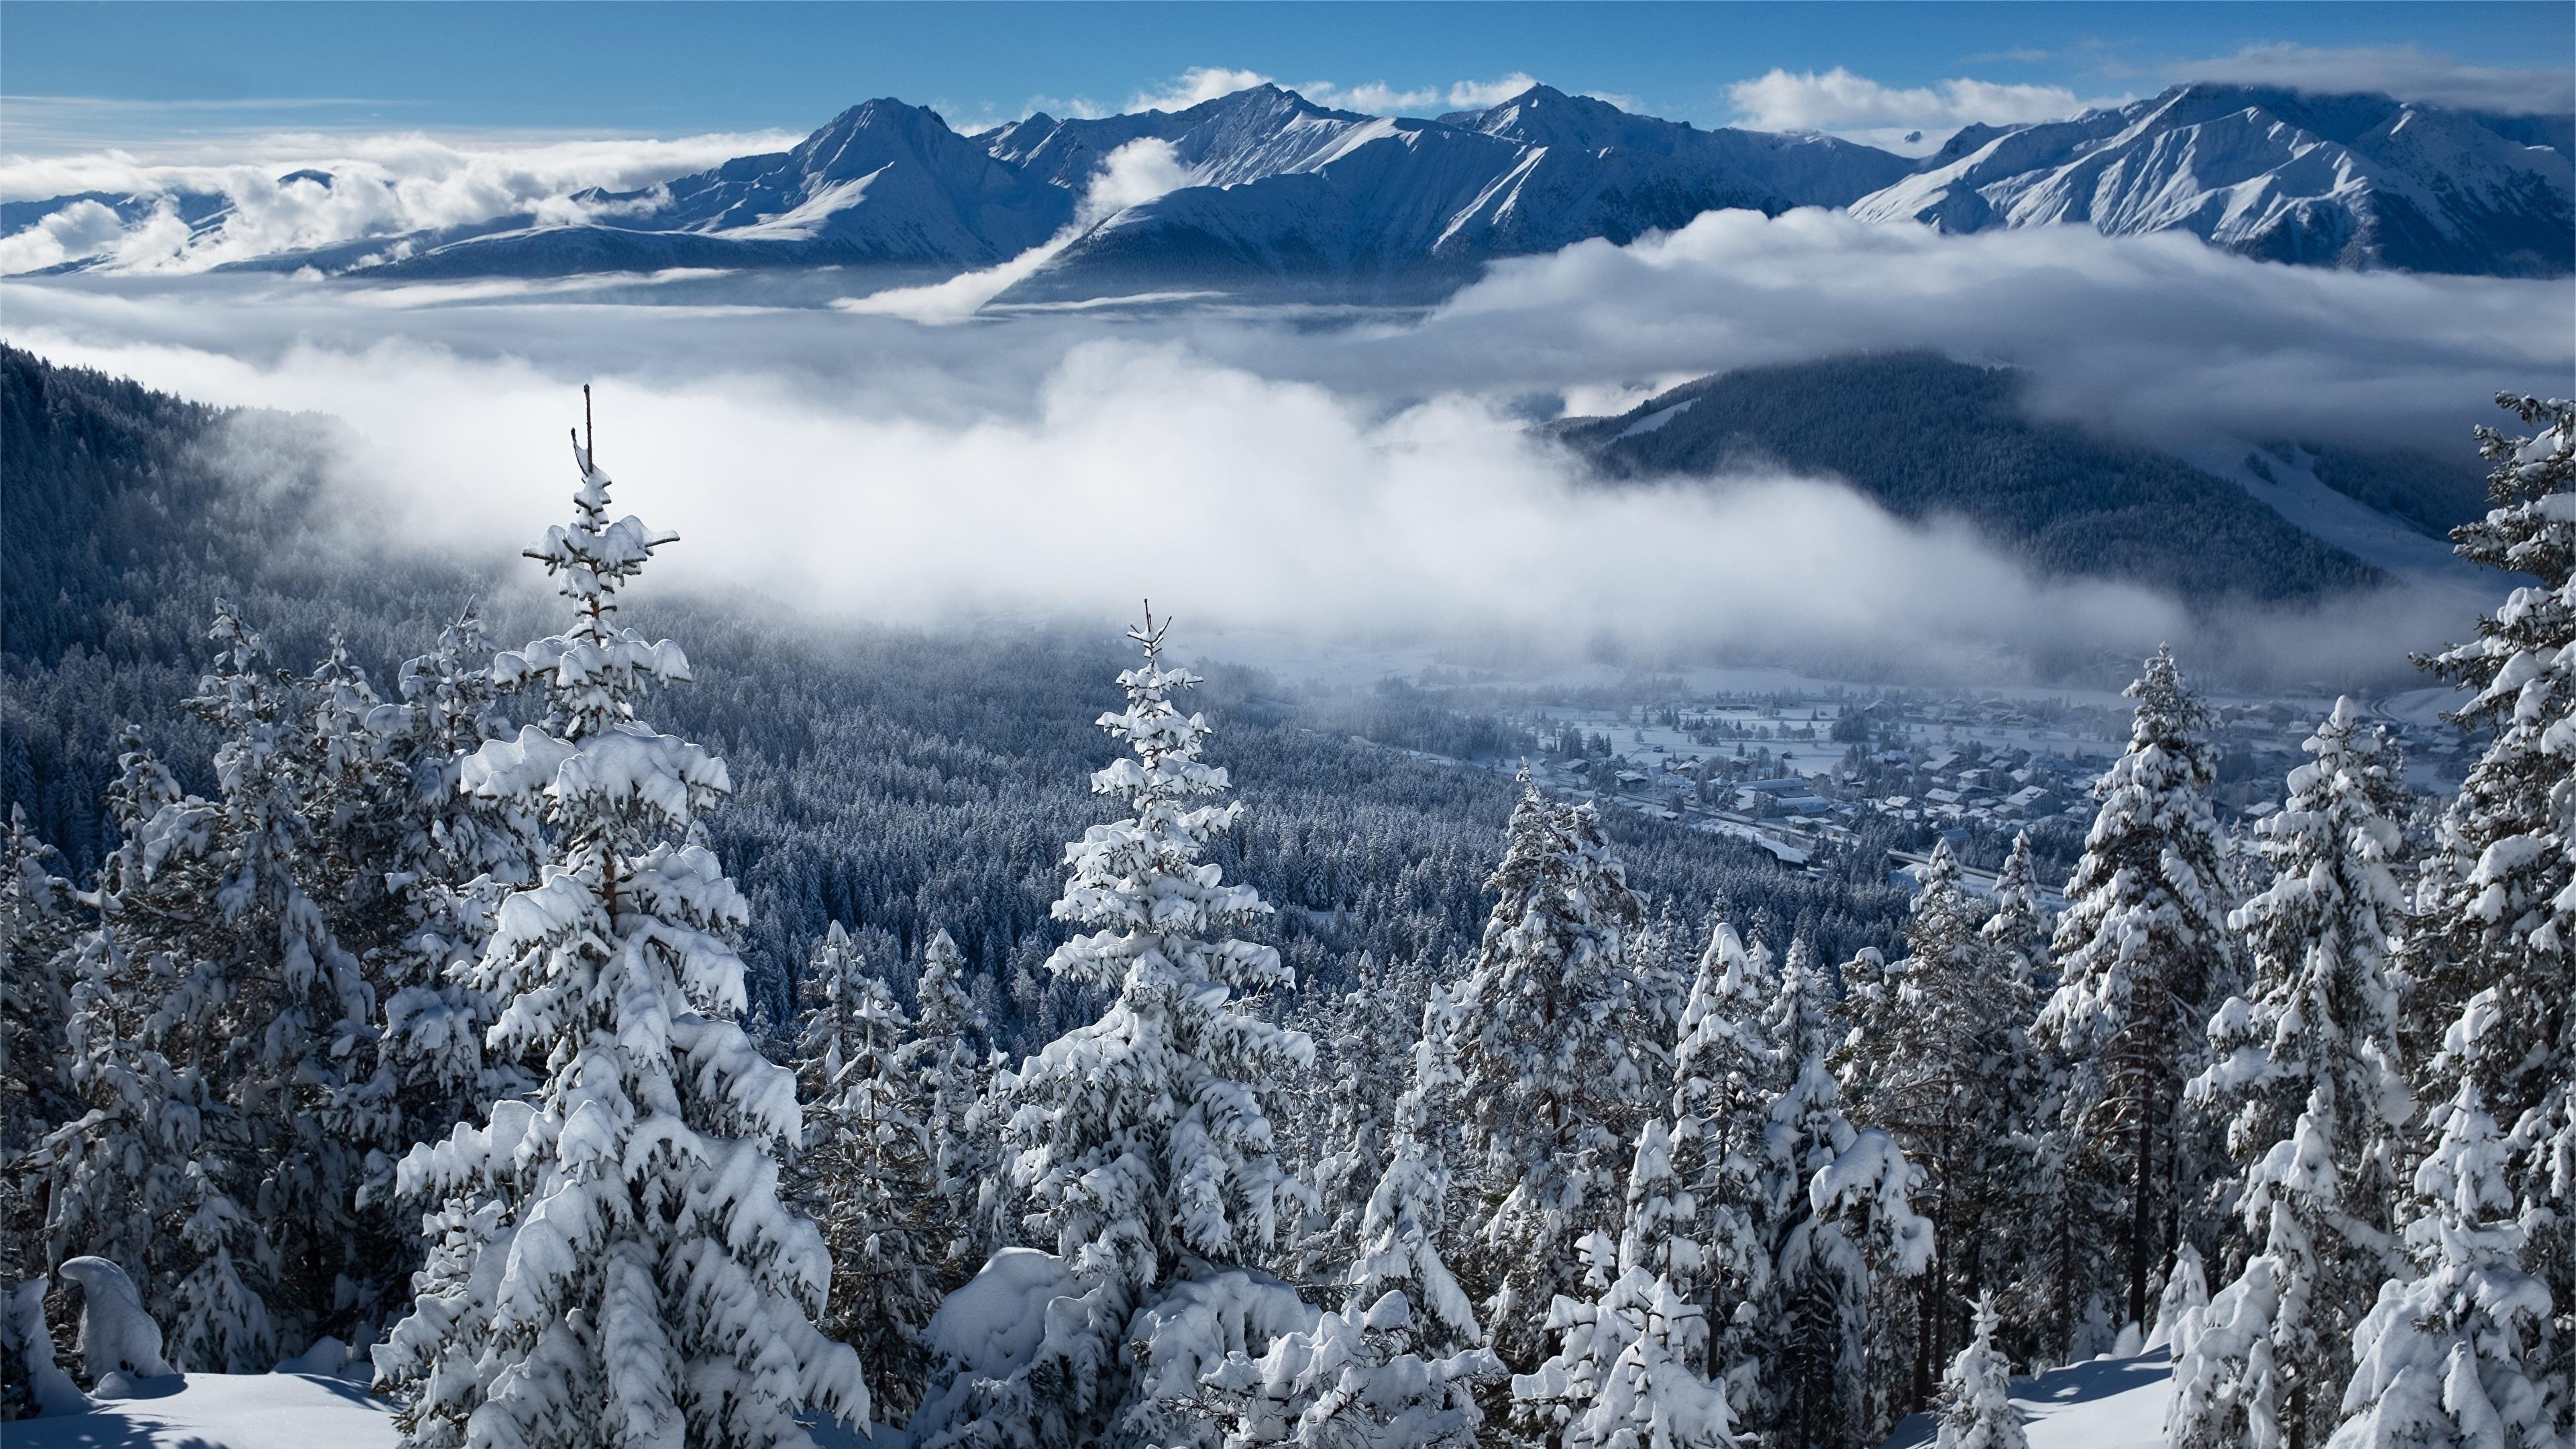 Snow-covered spruce trees, Mountain scenery, Blue sky, Winter wonderland, 3840x2160 4K Desktop